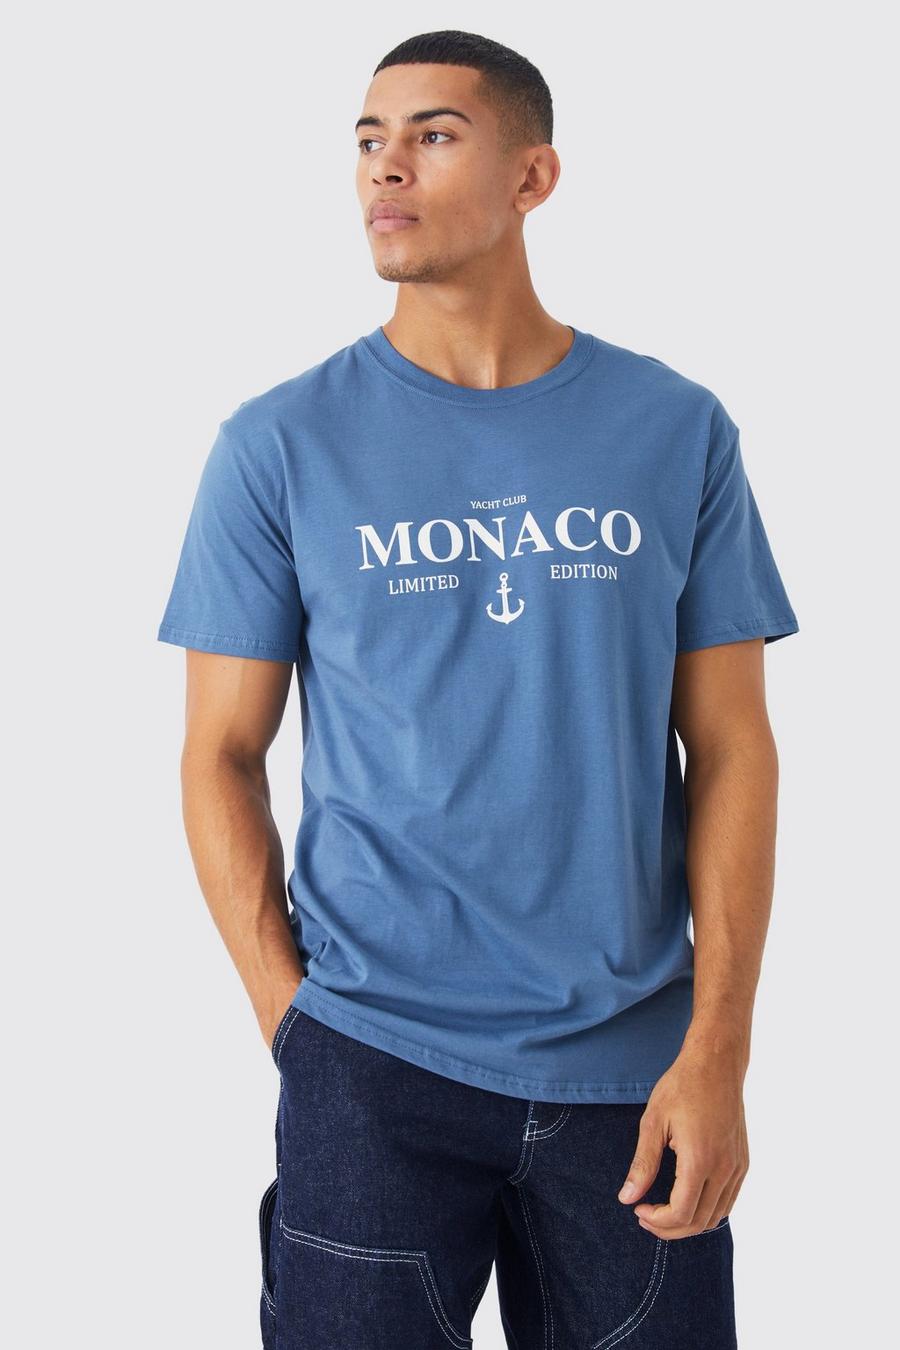 Blue Oversized Monaco Limited Edition T-shirt